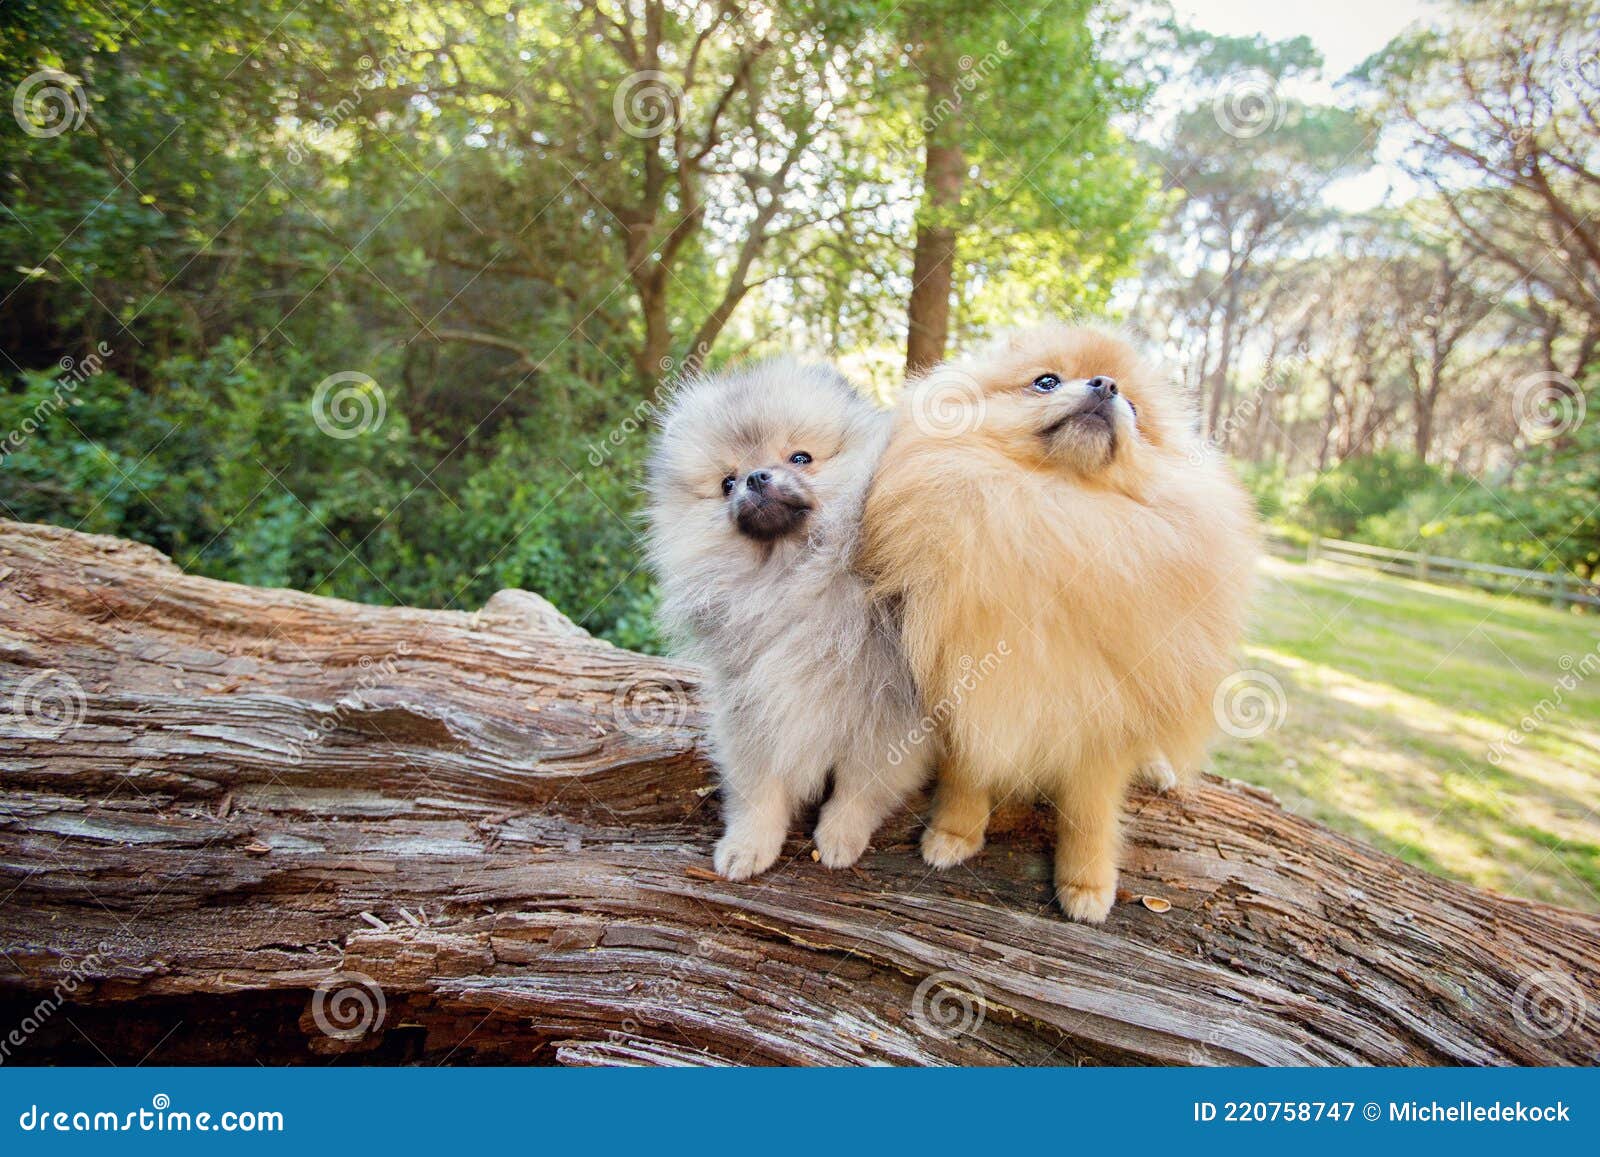 2,756 Toy Pomeranian Photos Free & Royalty-Free Stock Photos from Dreamstime